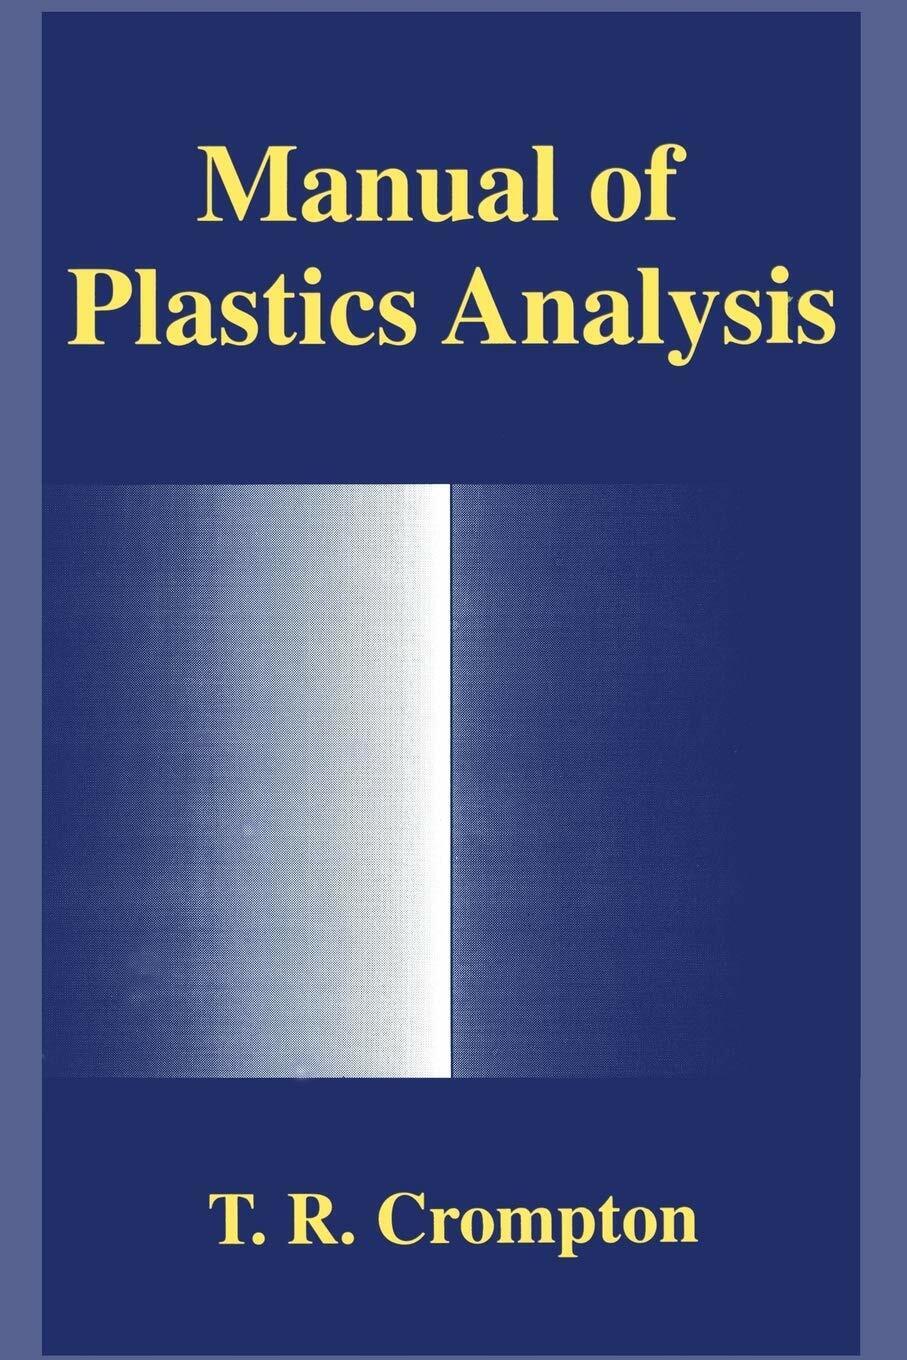 Manual of Plastics Analysis - T. R Crompton - Springer, 2013